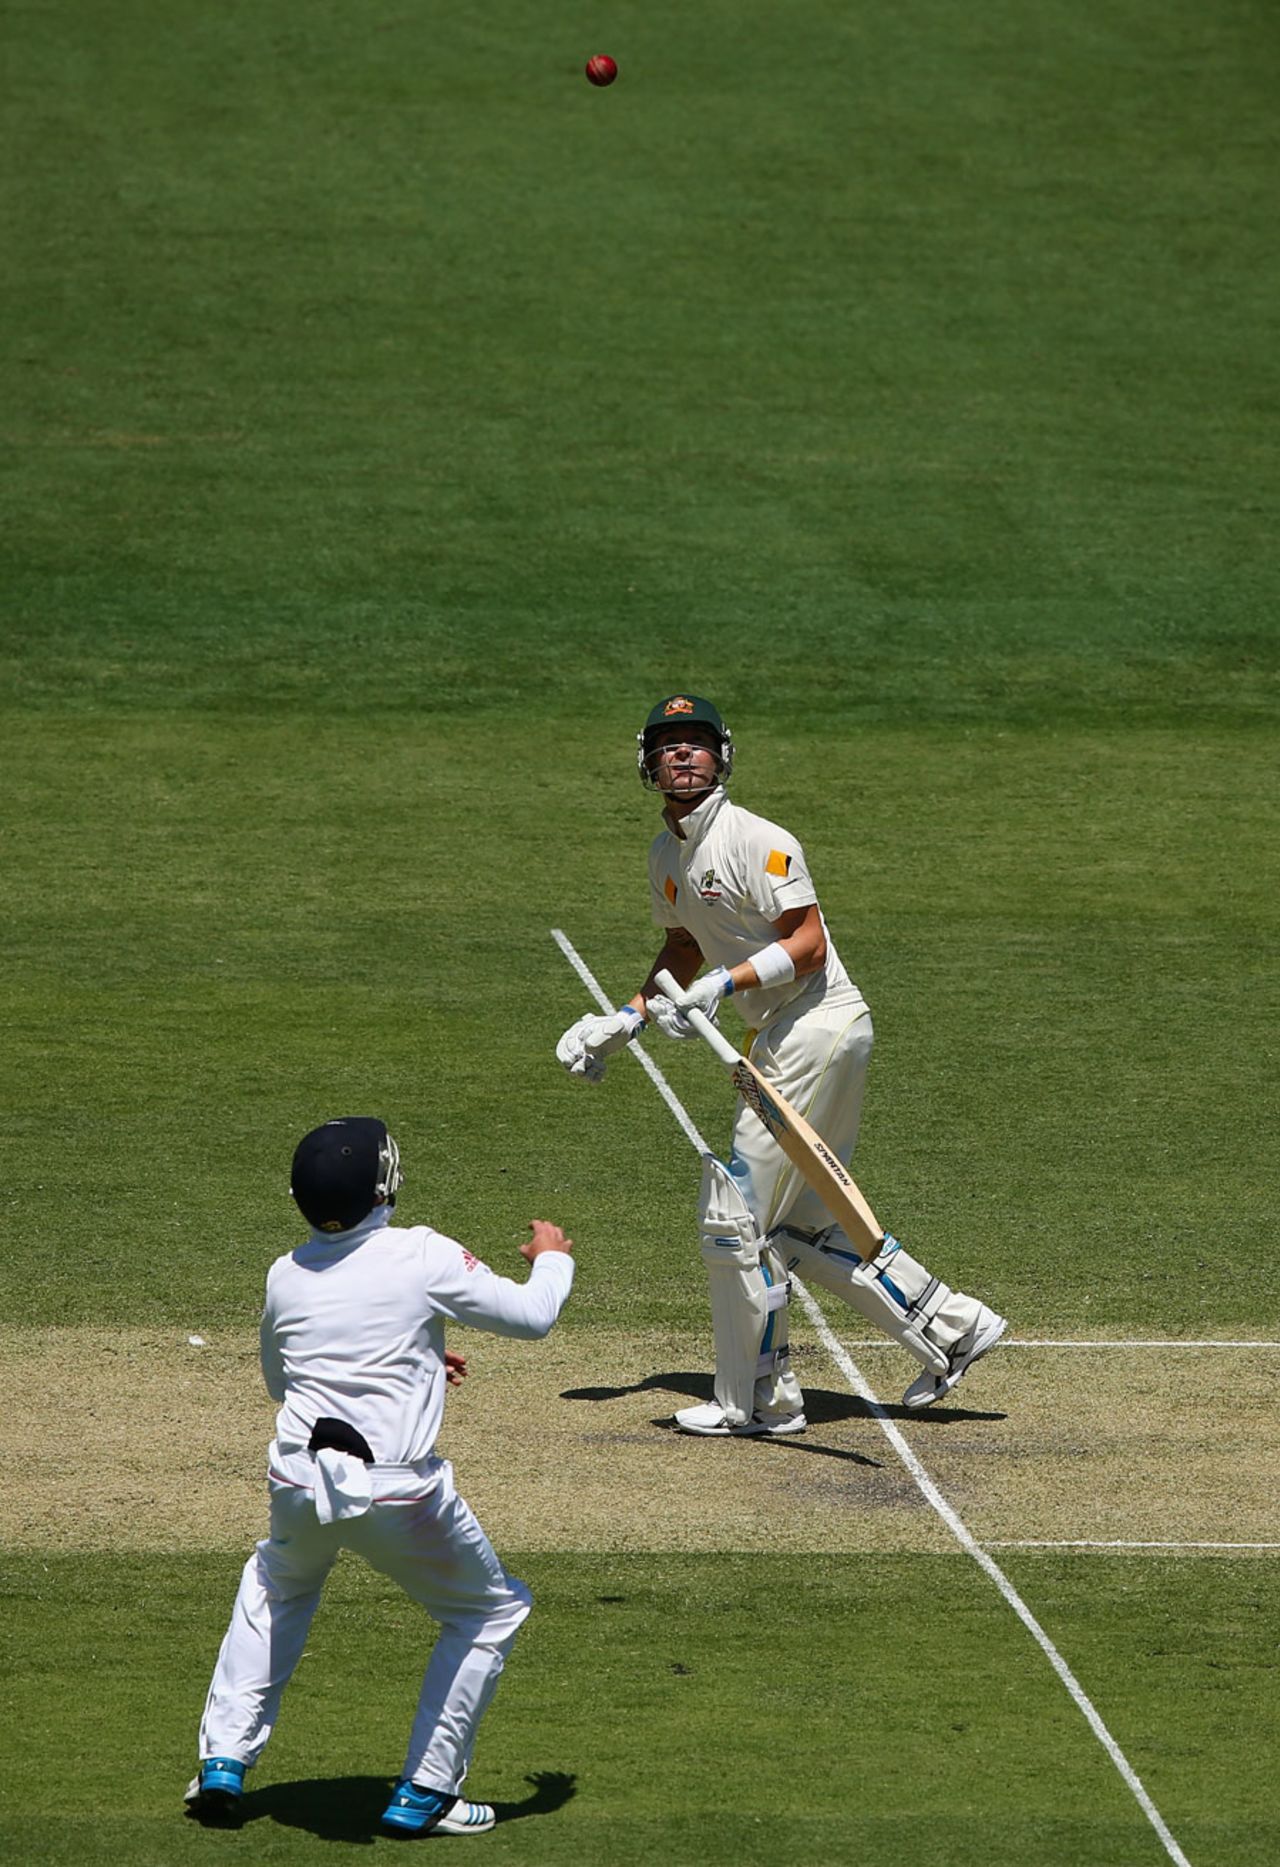 Ian Bell sets himself to catch the ball off Michael Clarke, Australia v England, 1st Test, Brisbane, 1st day, November 21, 2013